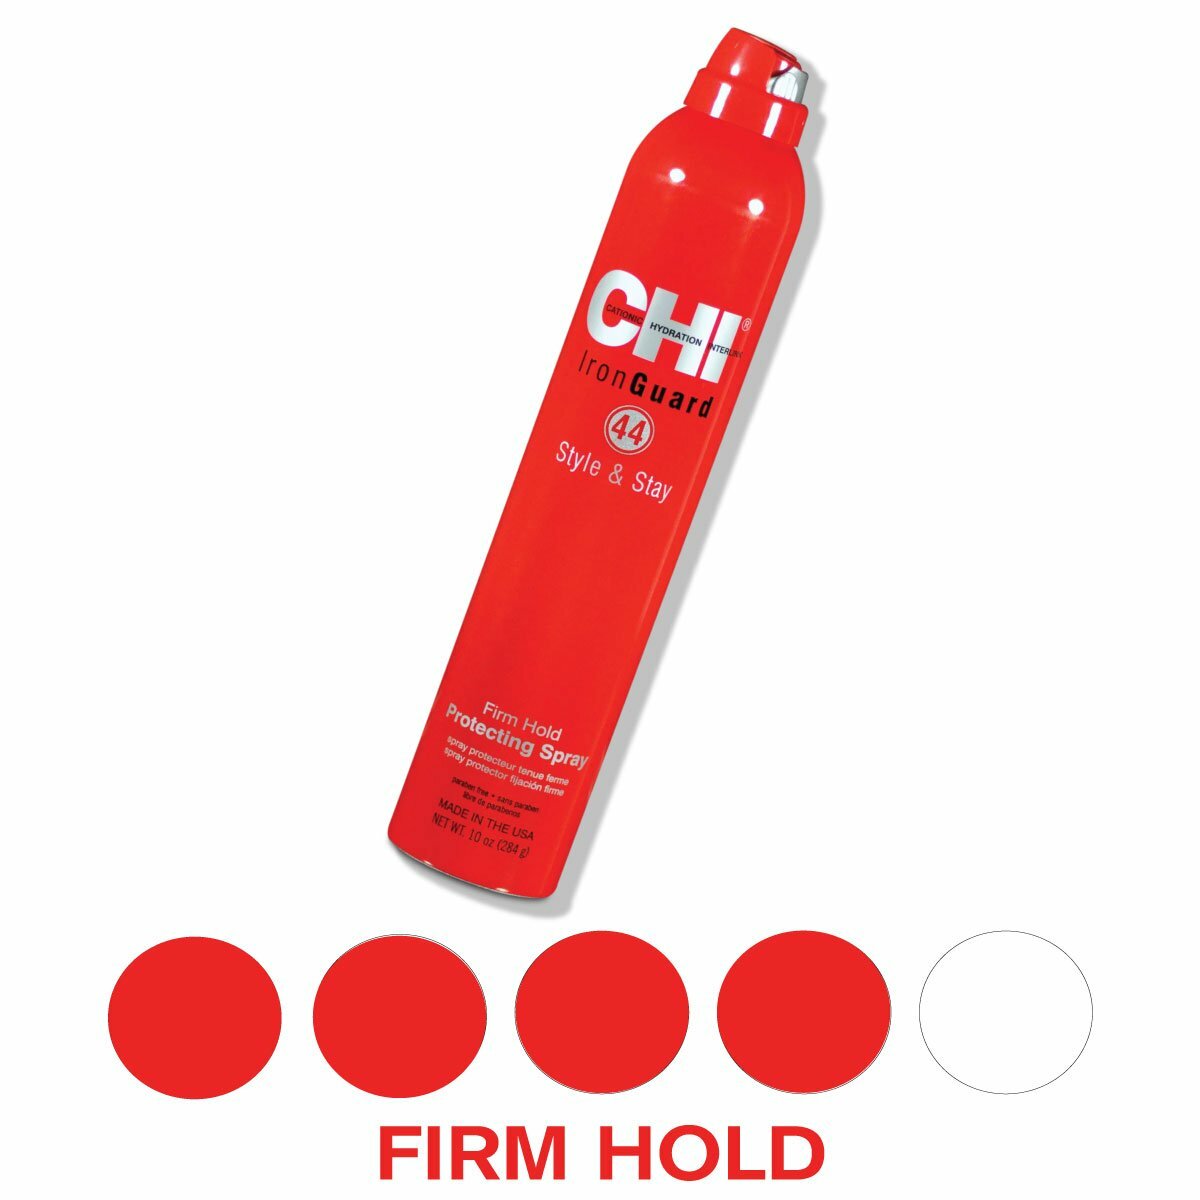 CHI 44 Iron Guard Firm Hold Protecting Spray -Термозащитный Спрей сильной фиксации 284 гр